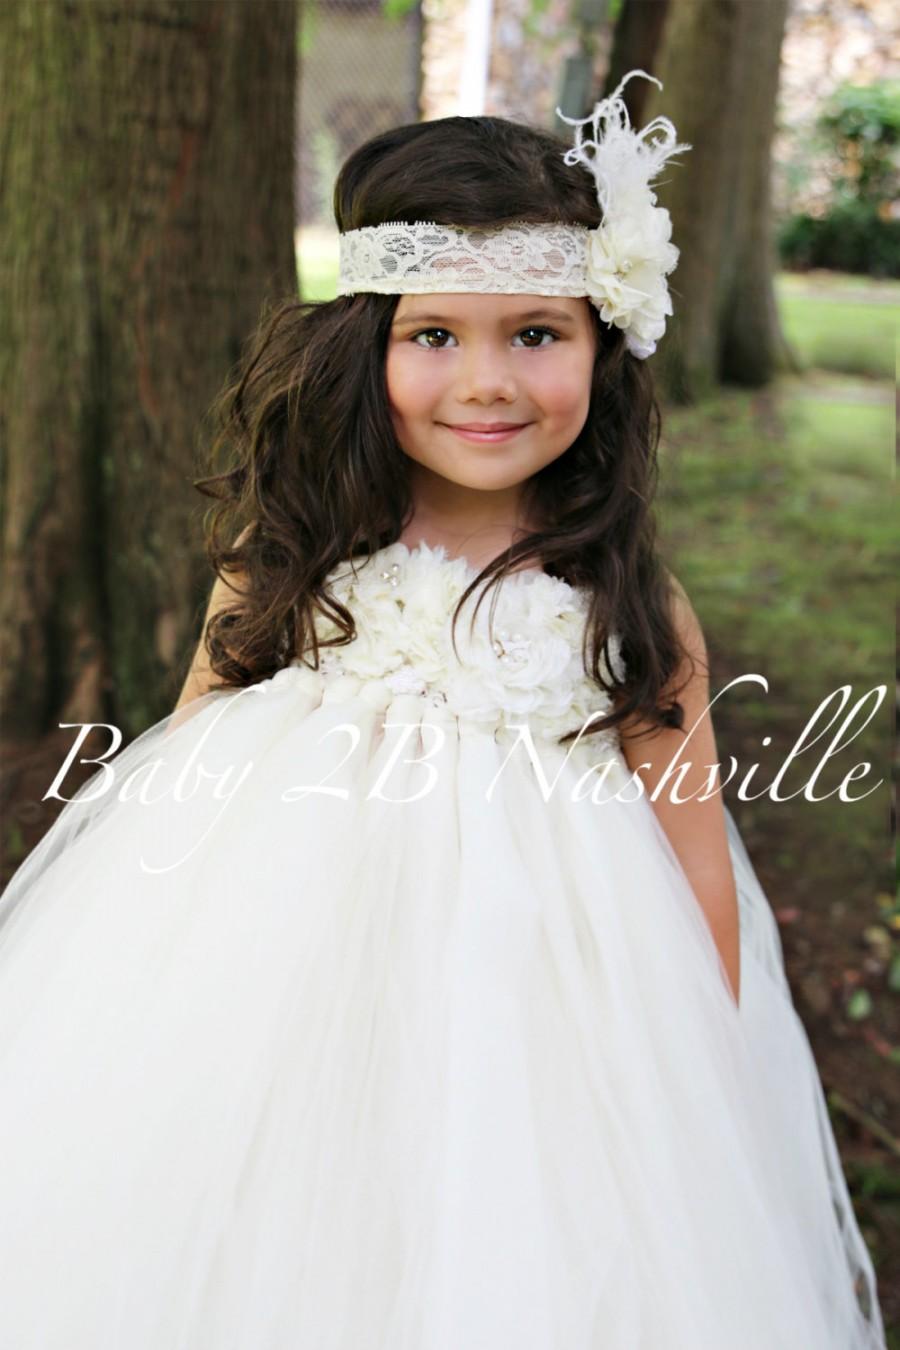 Wedding - Floral Ivory Flower Girl Dress Wedding Flower Gilrl Dress Tutu Dress  All Sizes  Baby to Girls size 10